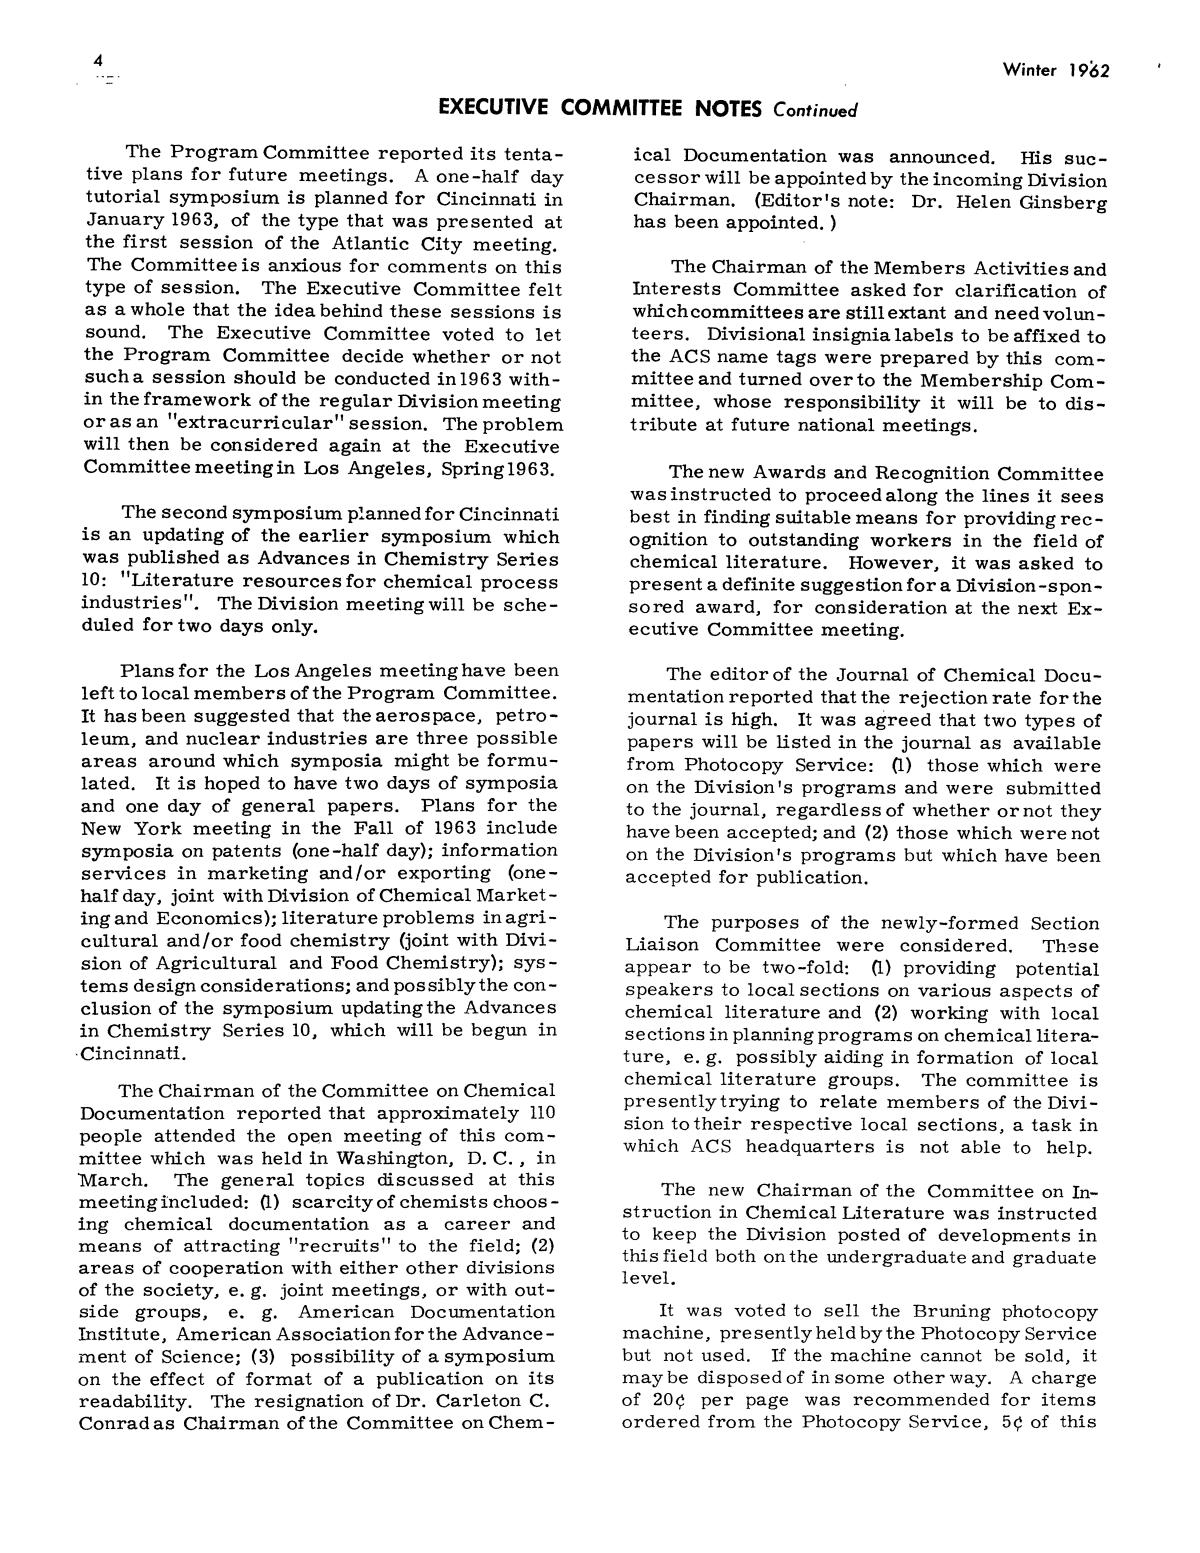 Chemical Literature, Volume 14, Number 4, Winter 1962
                                                
                                                    4
                                                